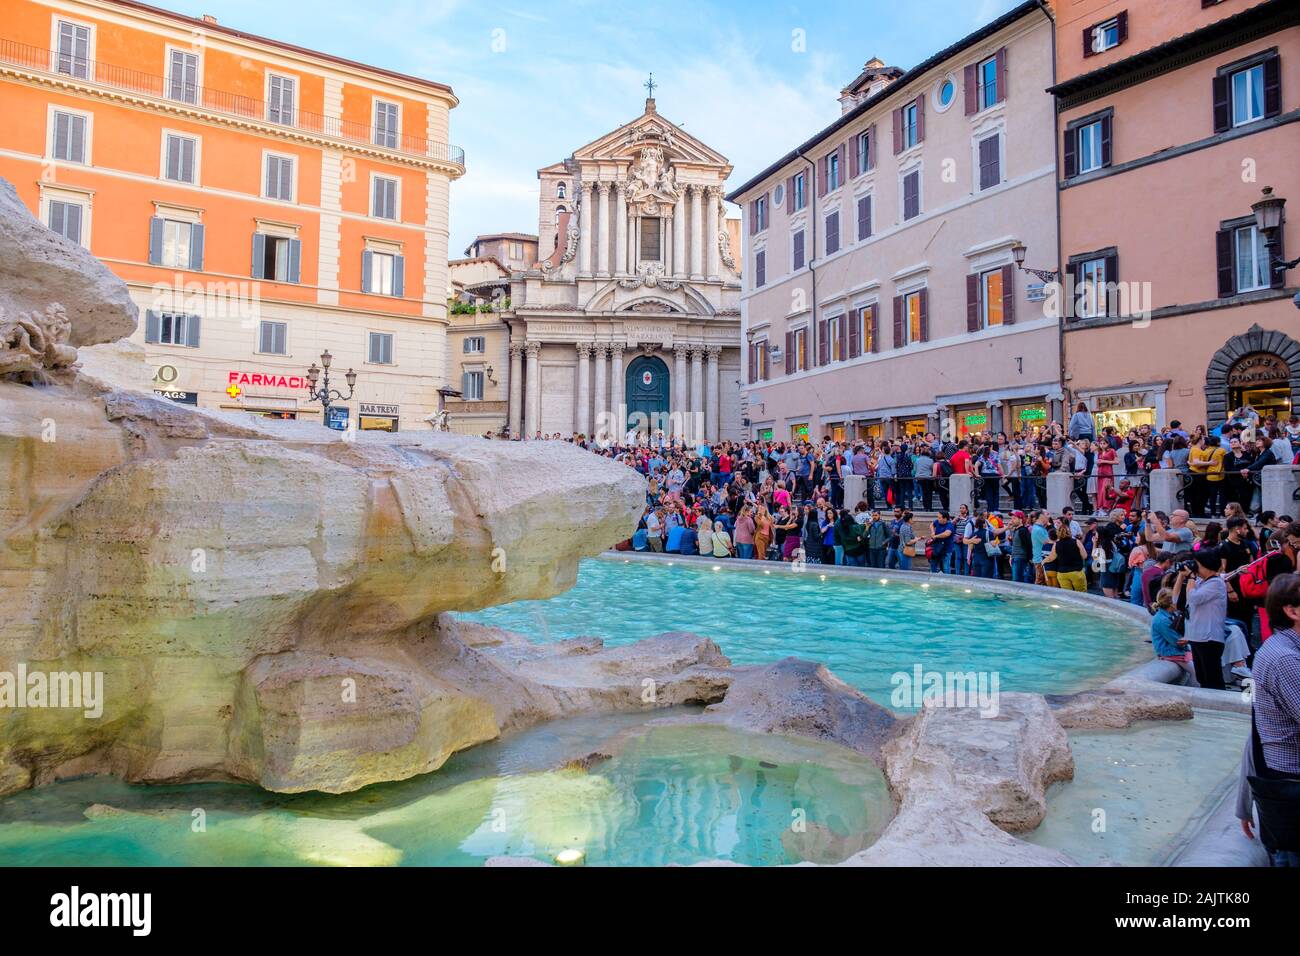 Fontana di Trevi, Trevi Fountain, tourists, crowd, crowded, overtourism, mass tourism, Trevi District, Rome, Italy Stock Photo